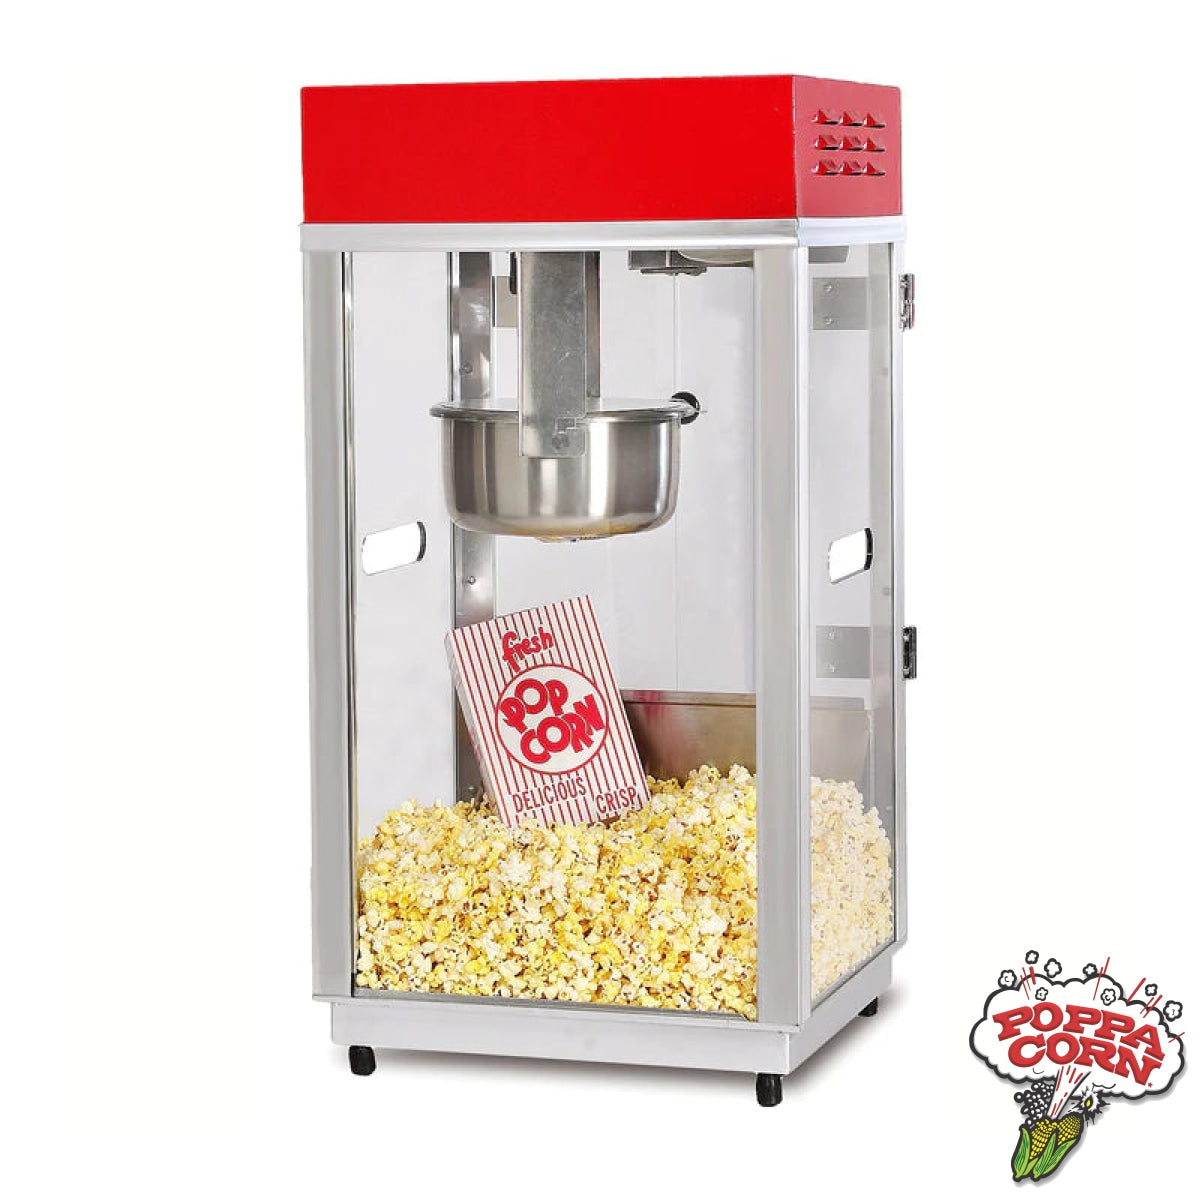 Super 88 Popcorn Machine - Rental Version - GM2488SR - Poppa Corn Corp